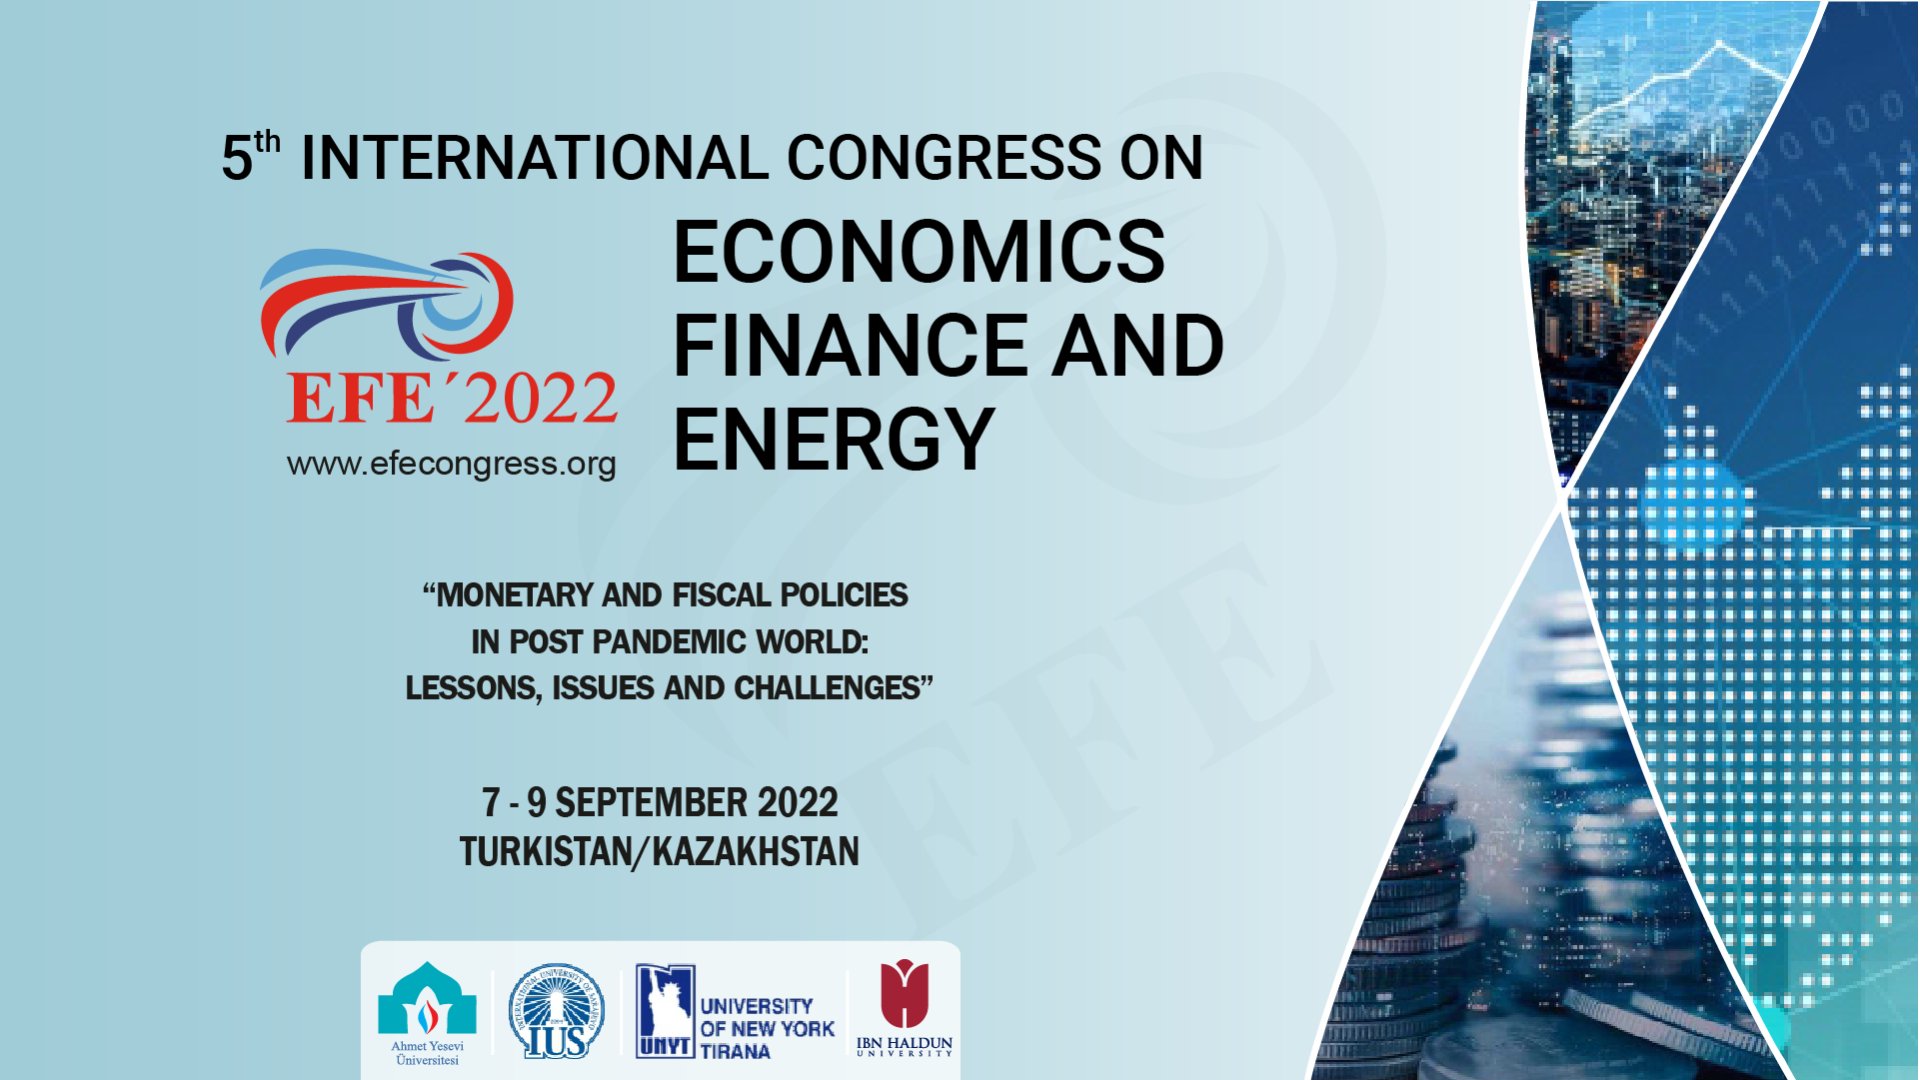 5th International Congress on Economics, Finance and Energy (Efe’2022)